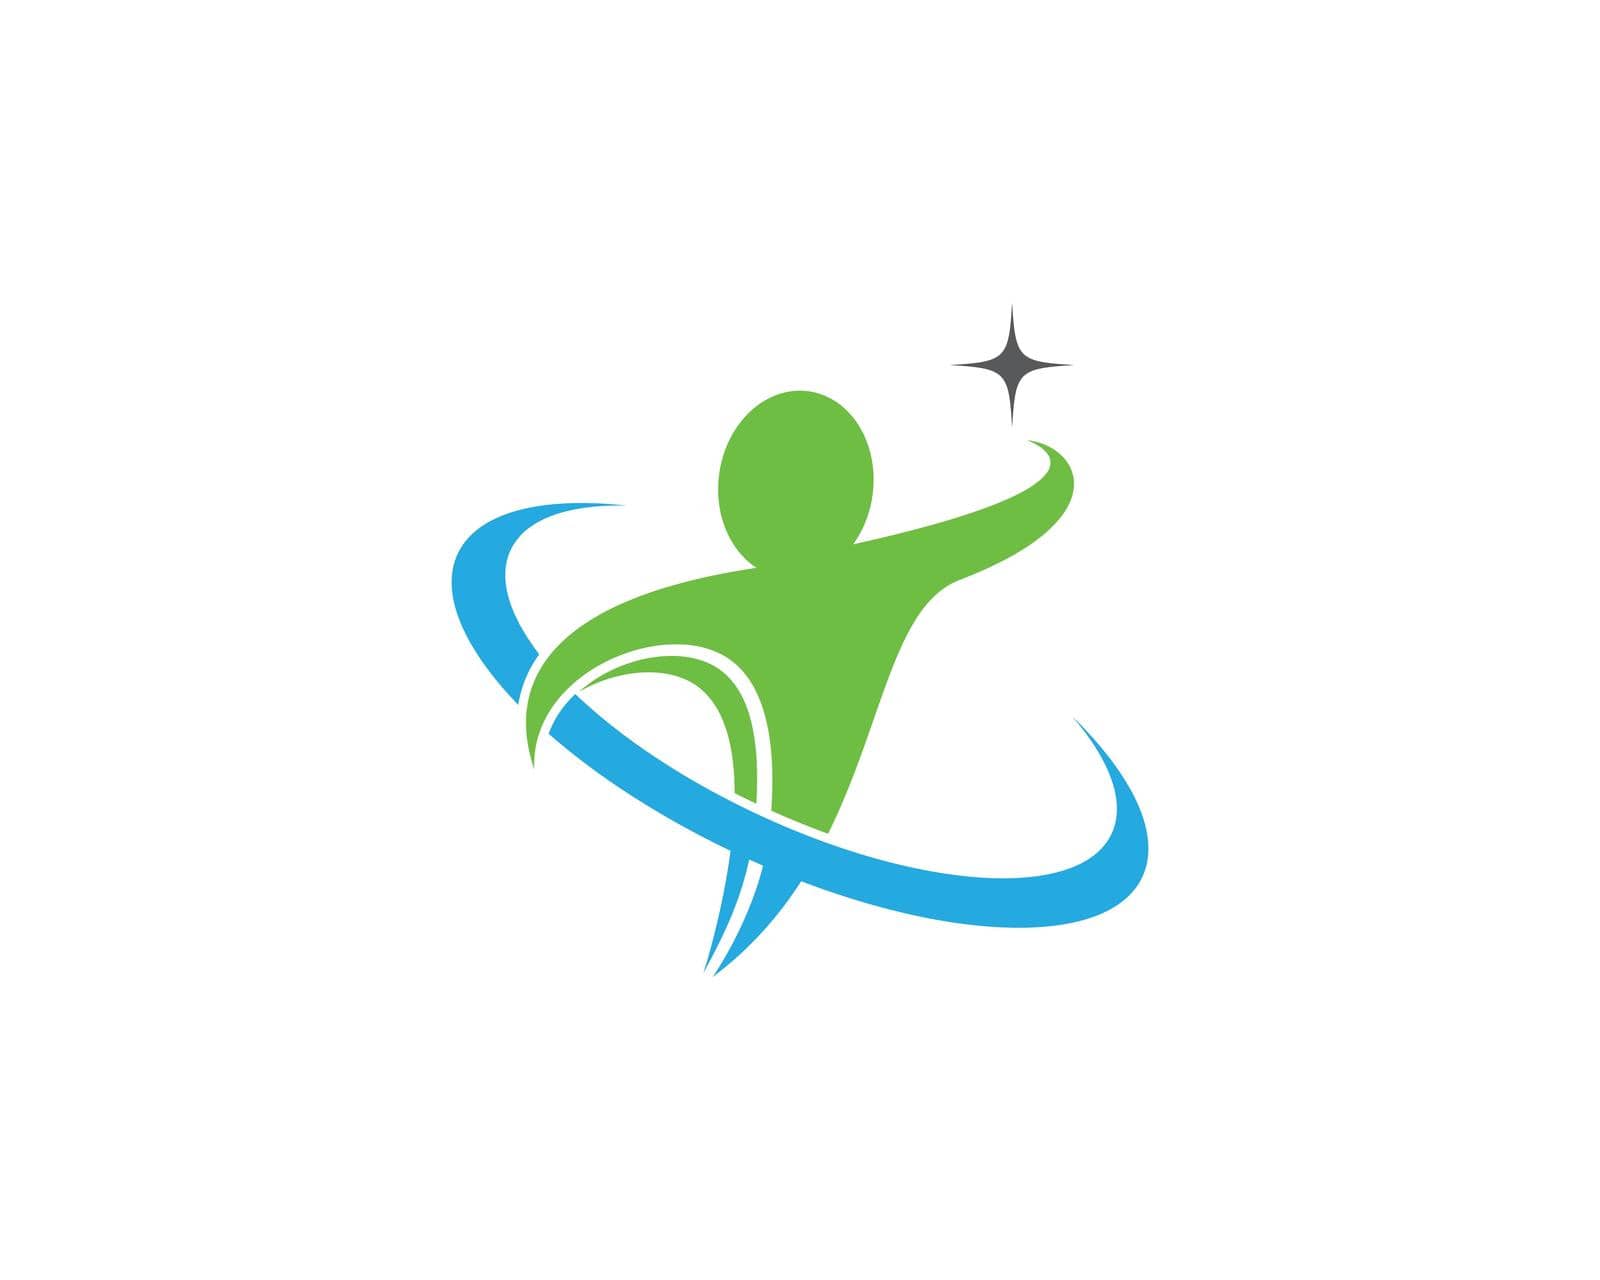 Sport logo symbol vector icon illustration by Fat17